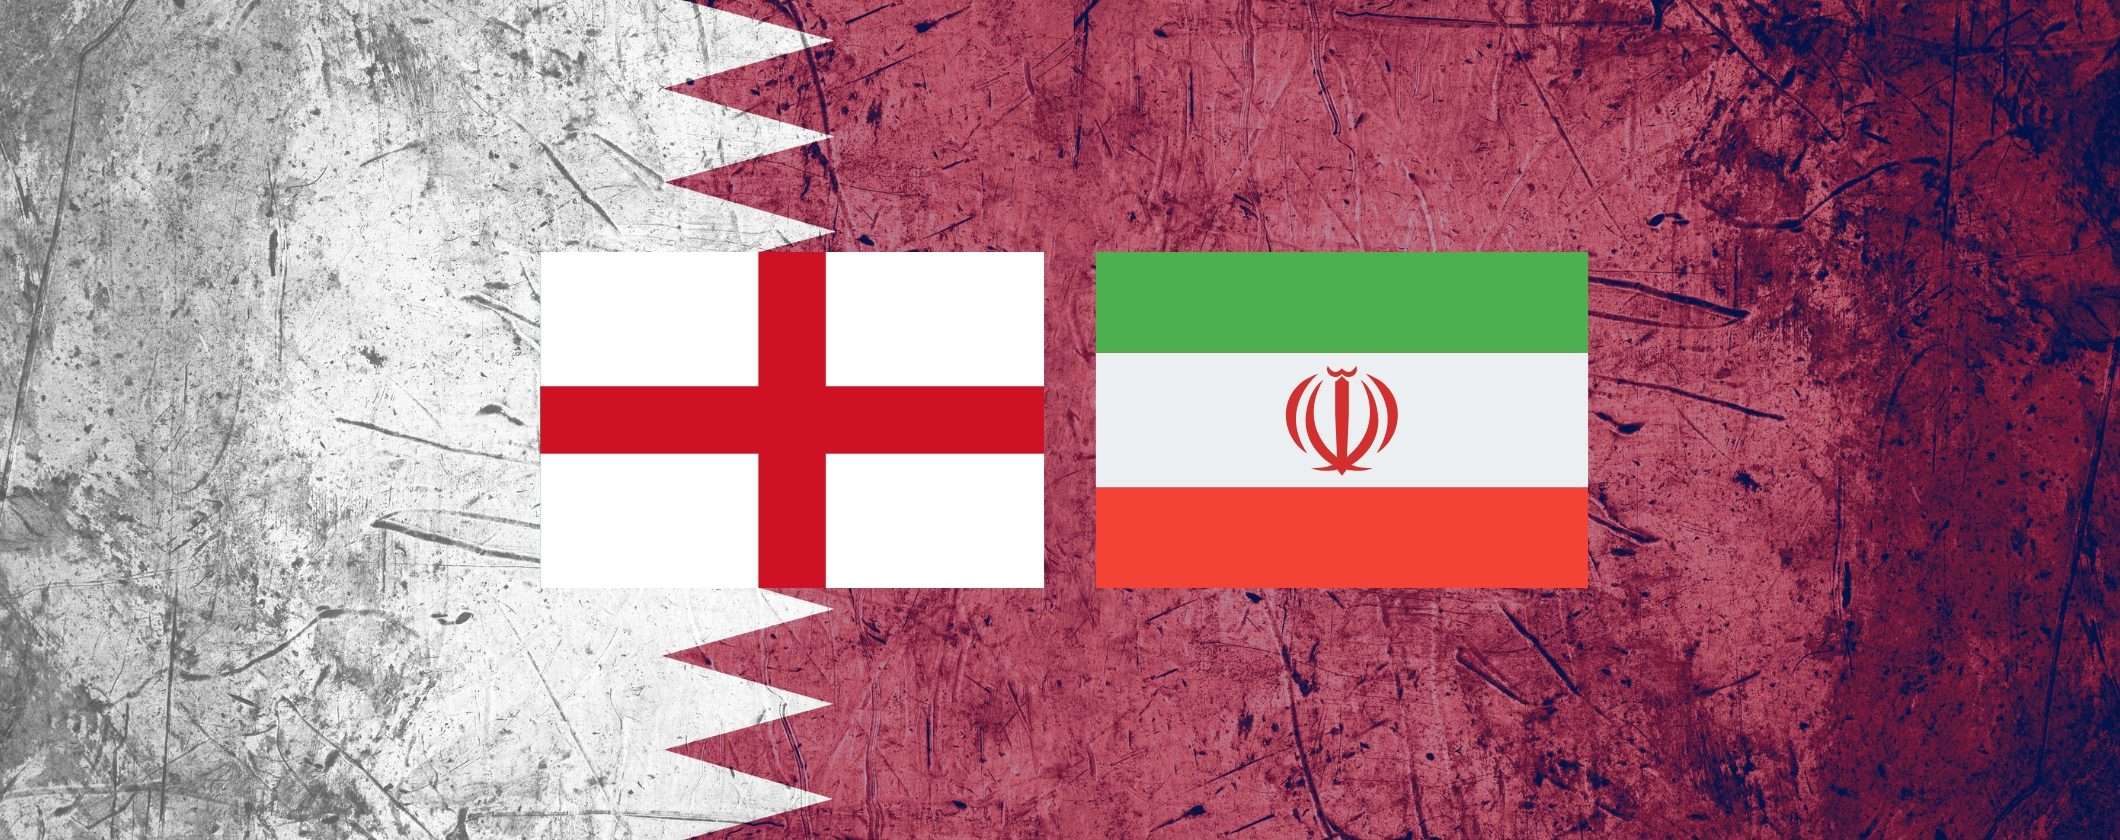 Qatar 2022: guarda Inghilterra-Iran in streaming dall'estero